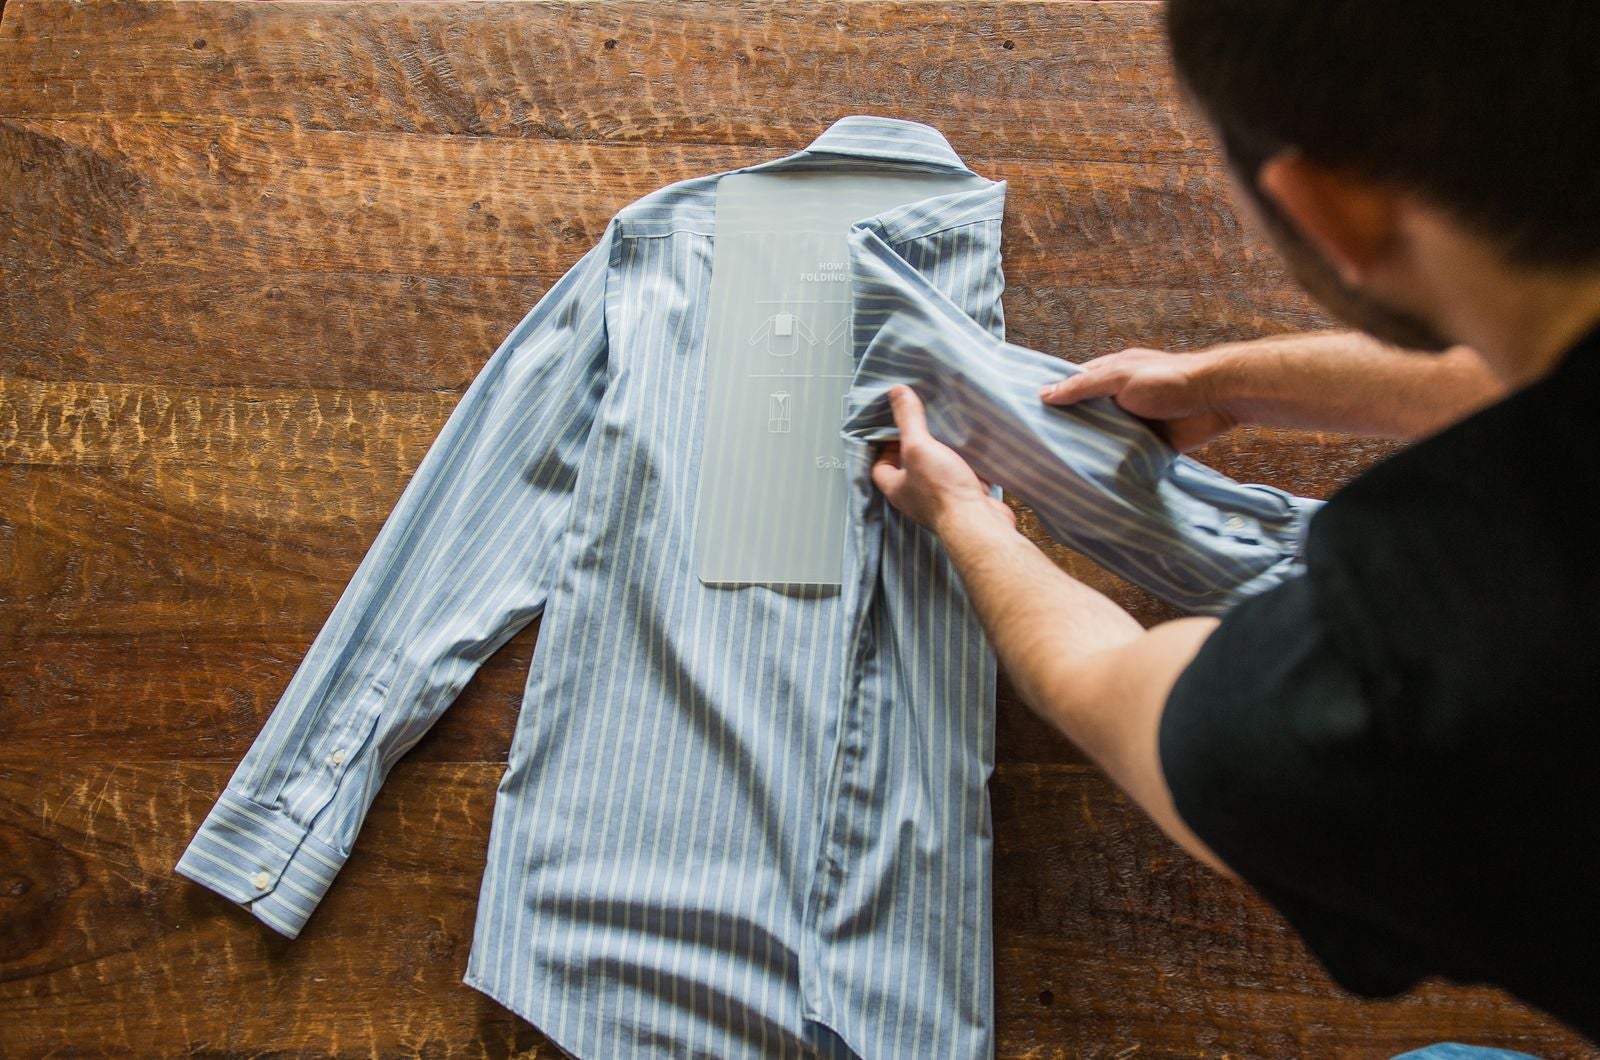 Folding long sleeved shirt using travel folding board